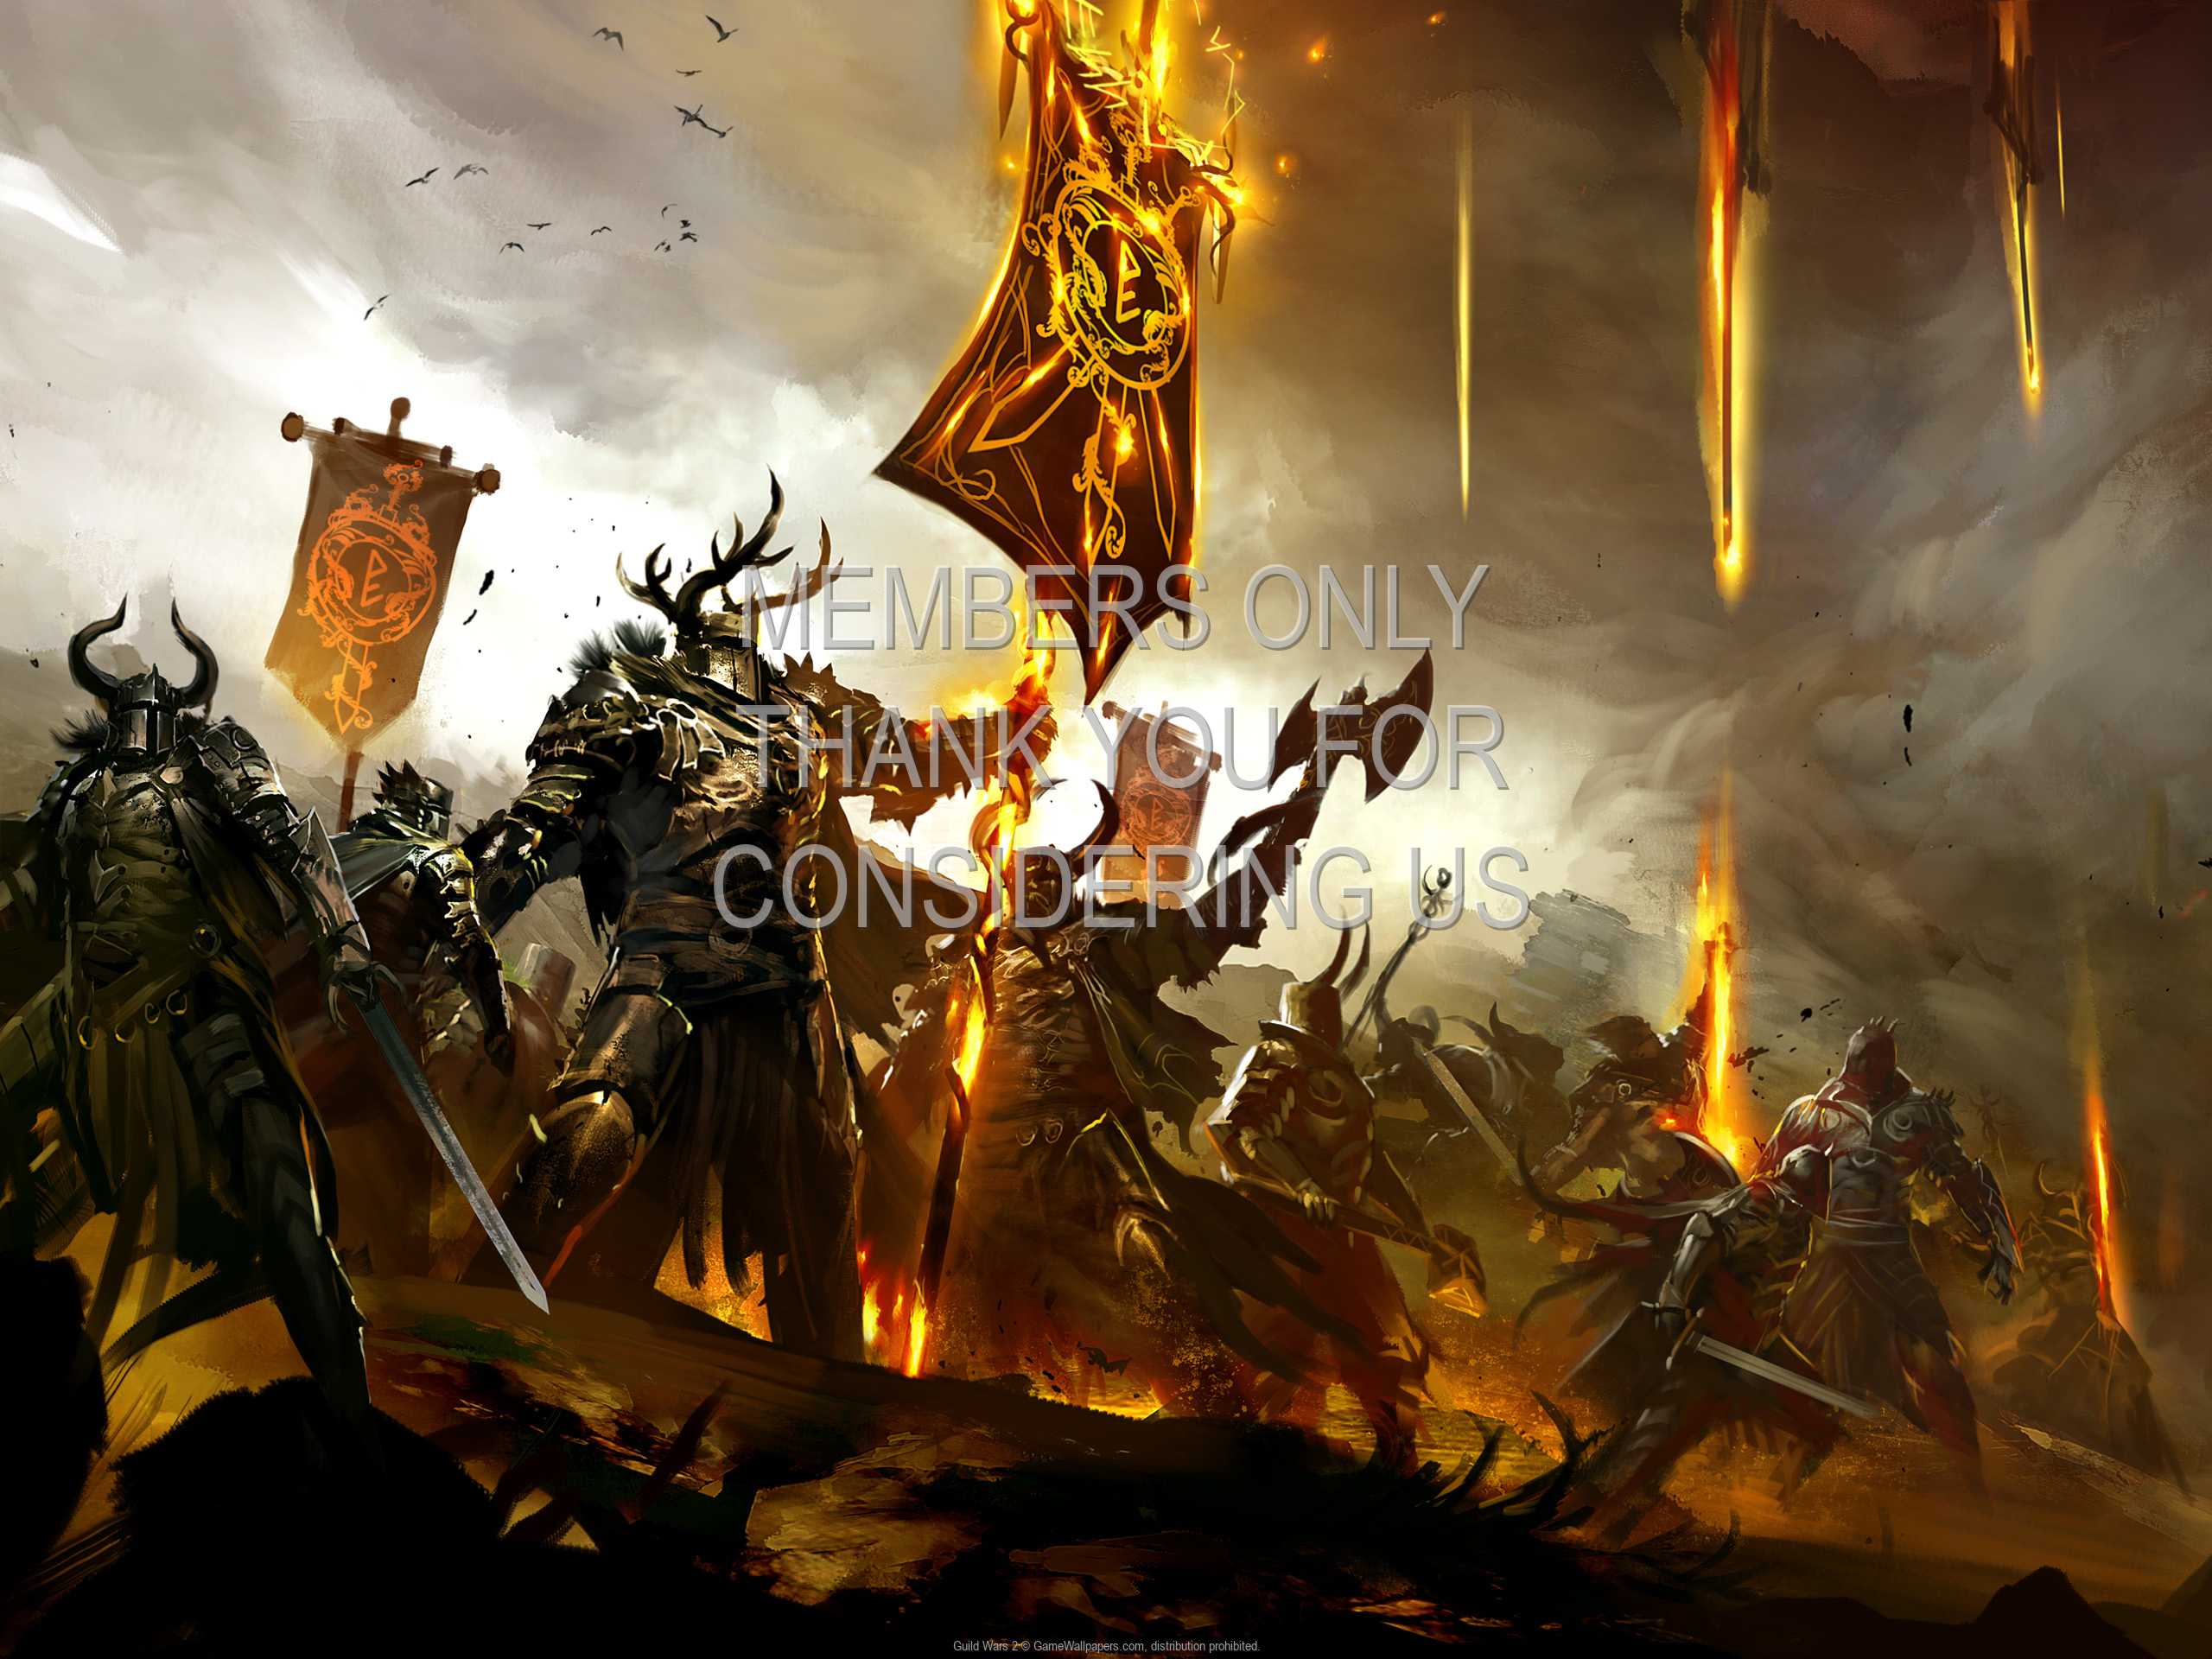 Guild Wars 2 1080p%20Horizontal Mobile wallpaper or background 19